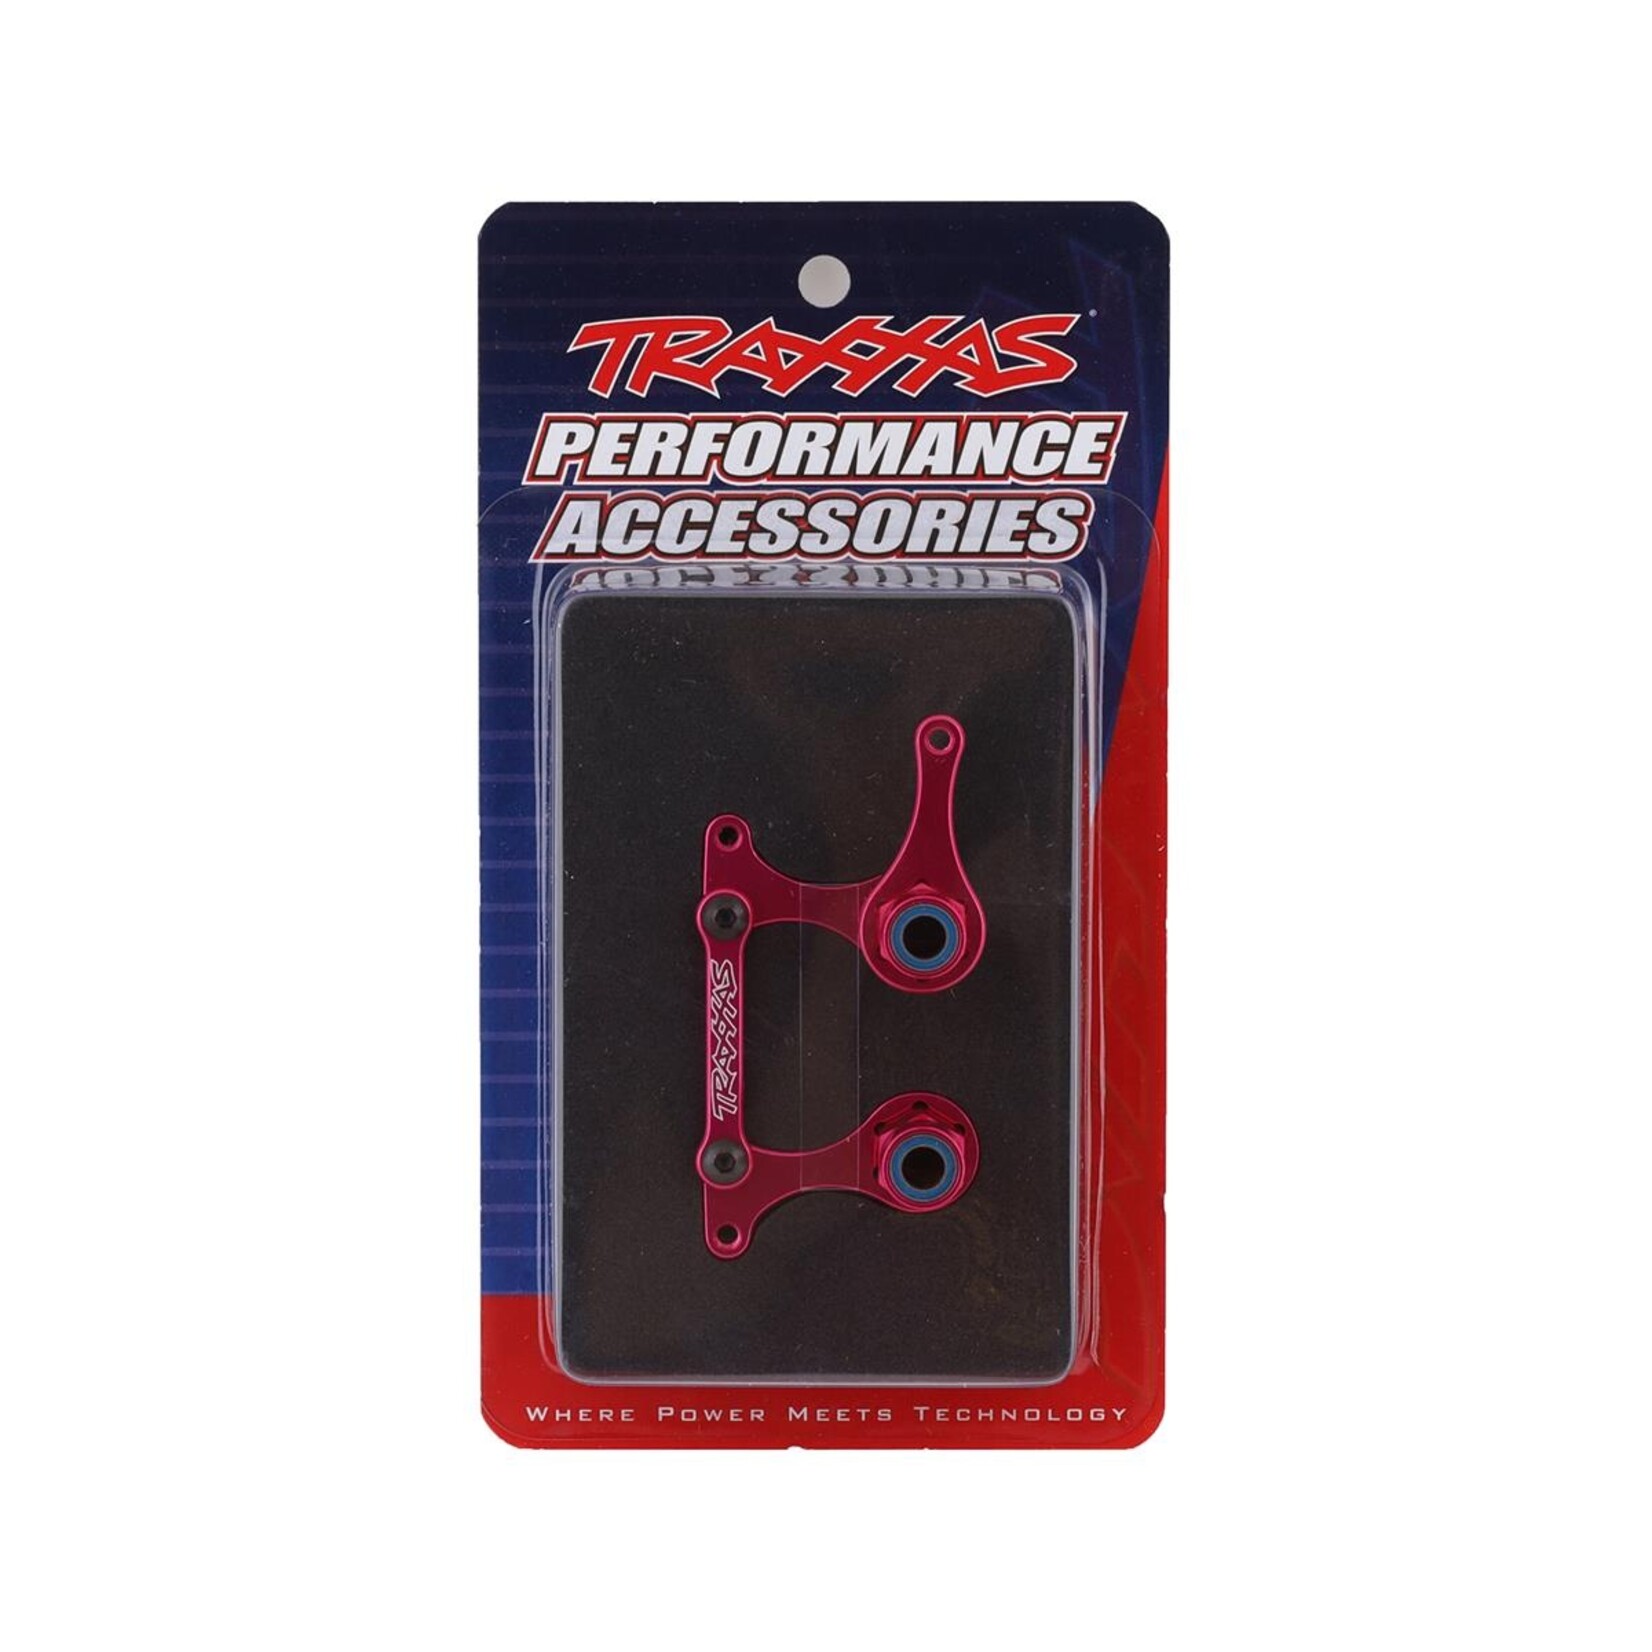 Traxxas Traxxas Aluminum Steering Bellcrank Set w/Bearings (Pink) #3743P